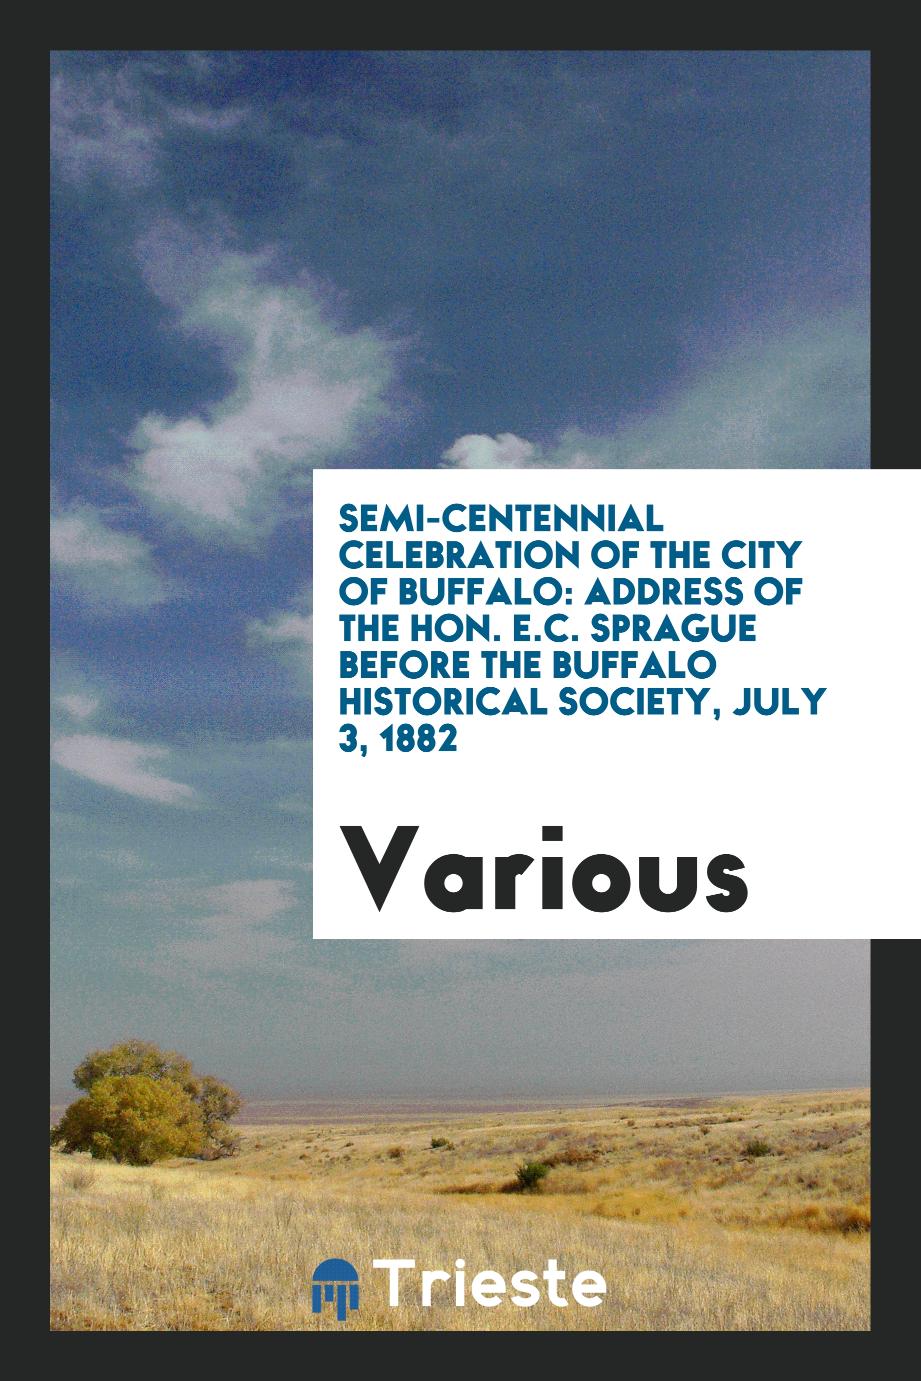 Semi-centennial Celebration of the City of Buffalo: Address of the Hon. E.C. Sprague Before the Buffalo Historical Society, July 3, 1882